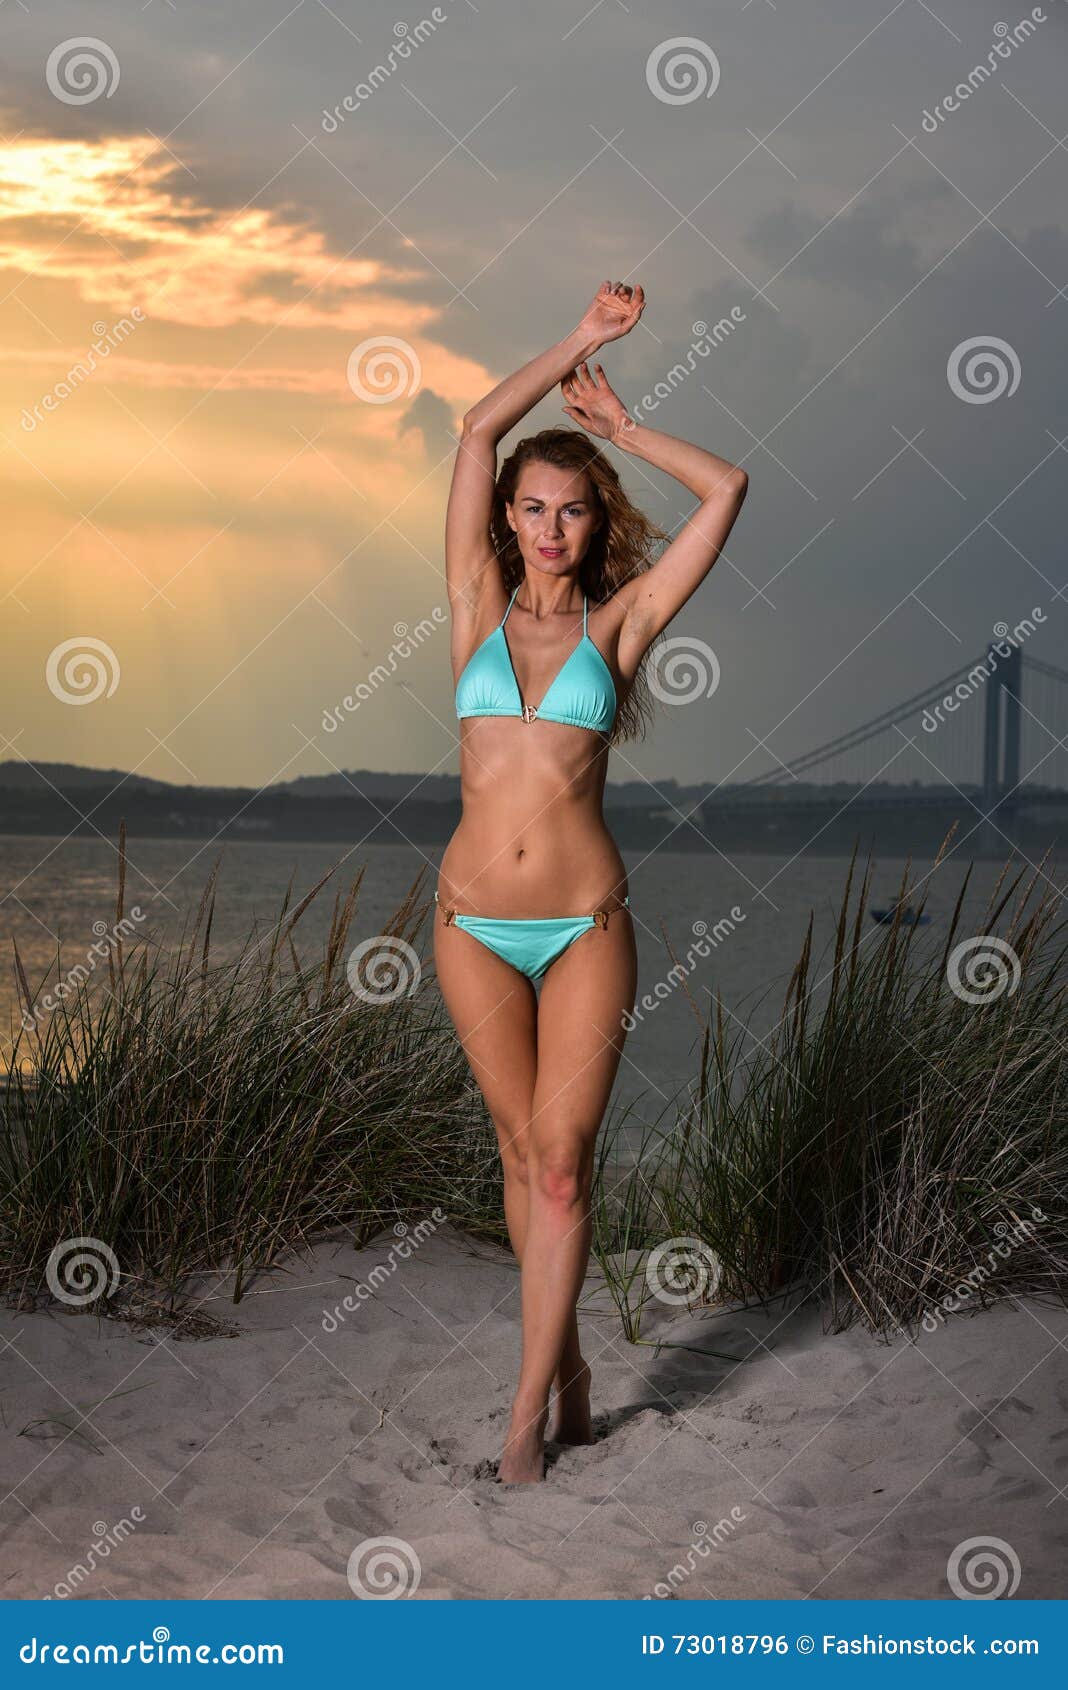 https://thumbs.dreamstime.com/z/beautiful-sexy-young-woman-perfect-slim-body-bikini-posing-beach-sunset-time-73018796.jpg